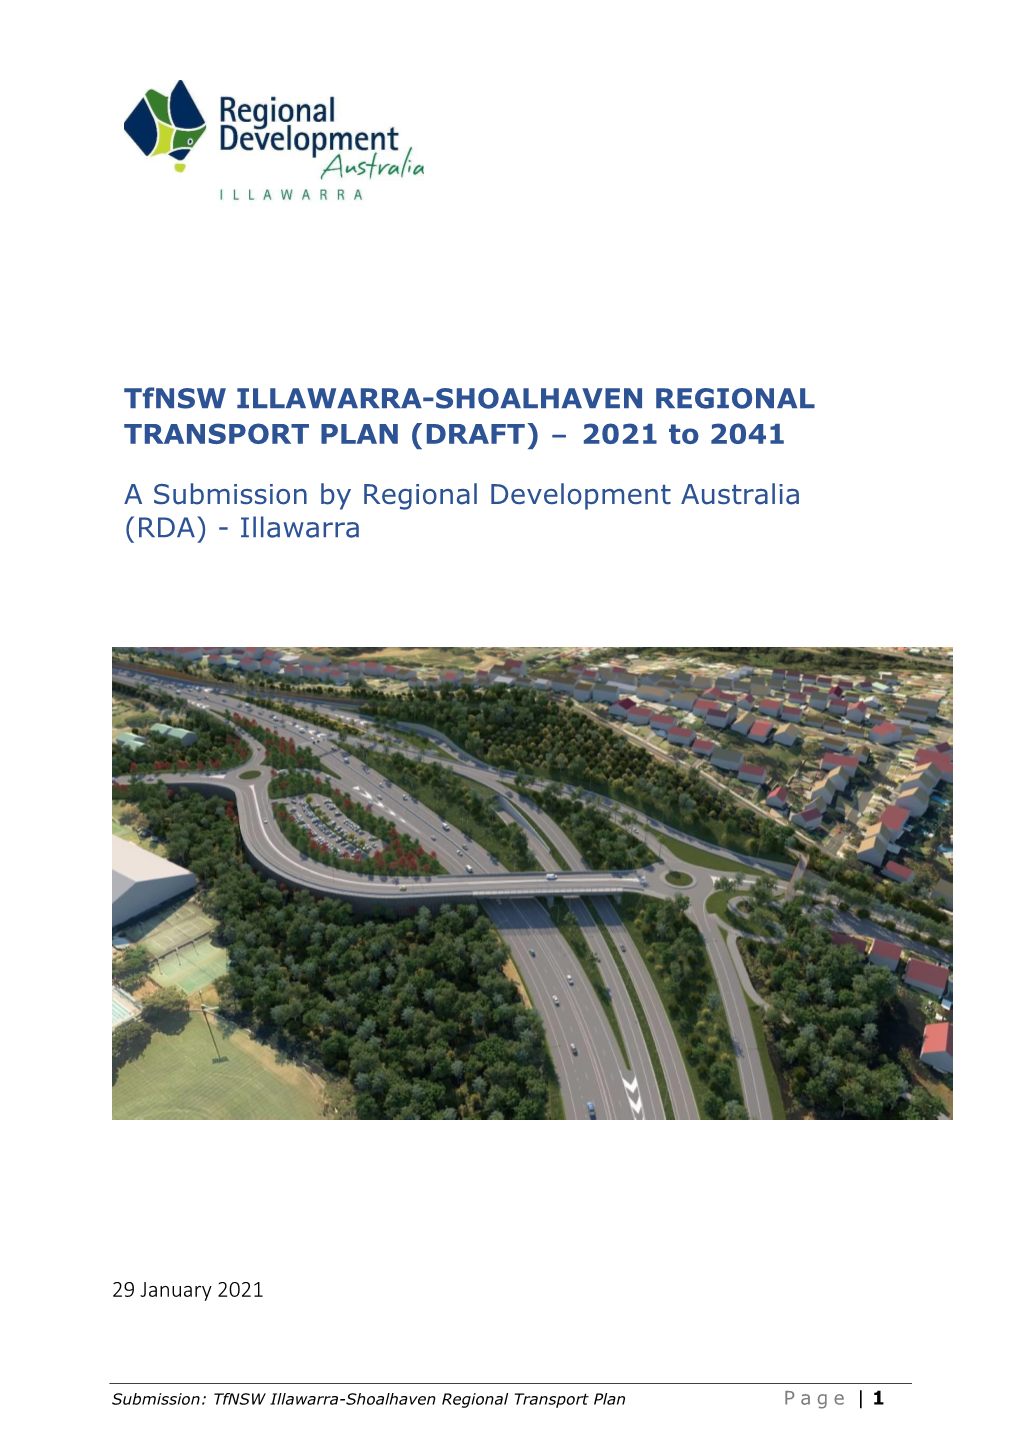 Tfnsw ILLAWARRA-SHOALHAVEN REGIONAL TRANSPORT PLAN (DRAFT) – 2021 to 2041